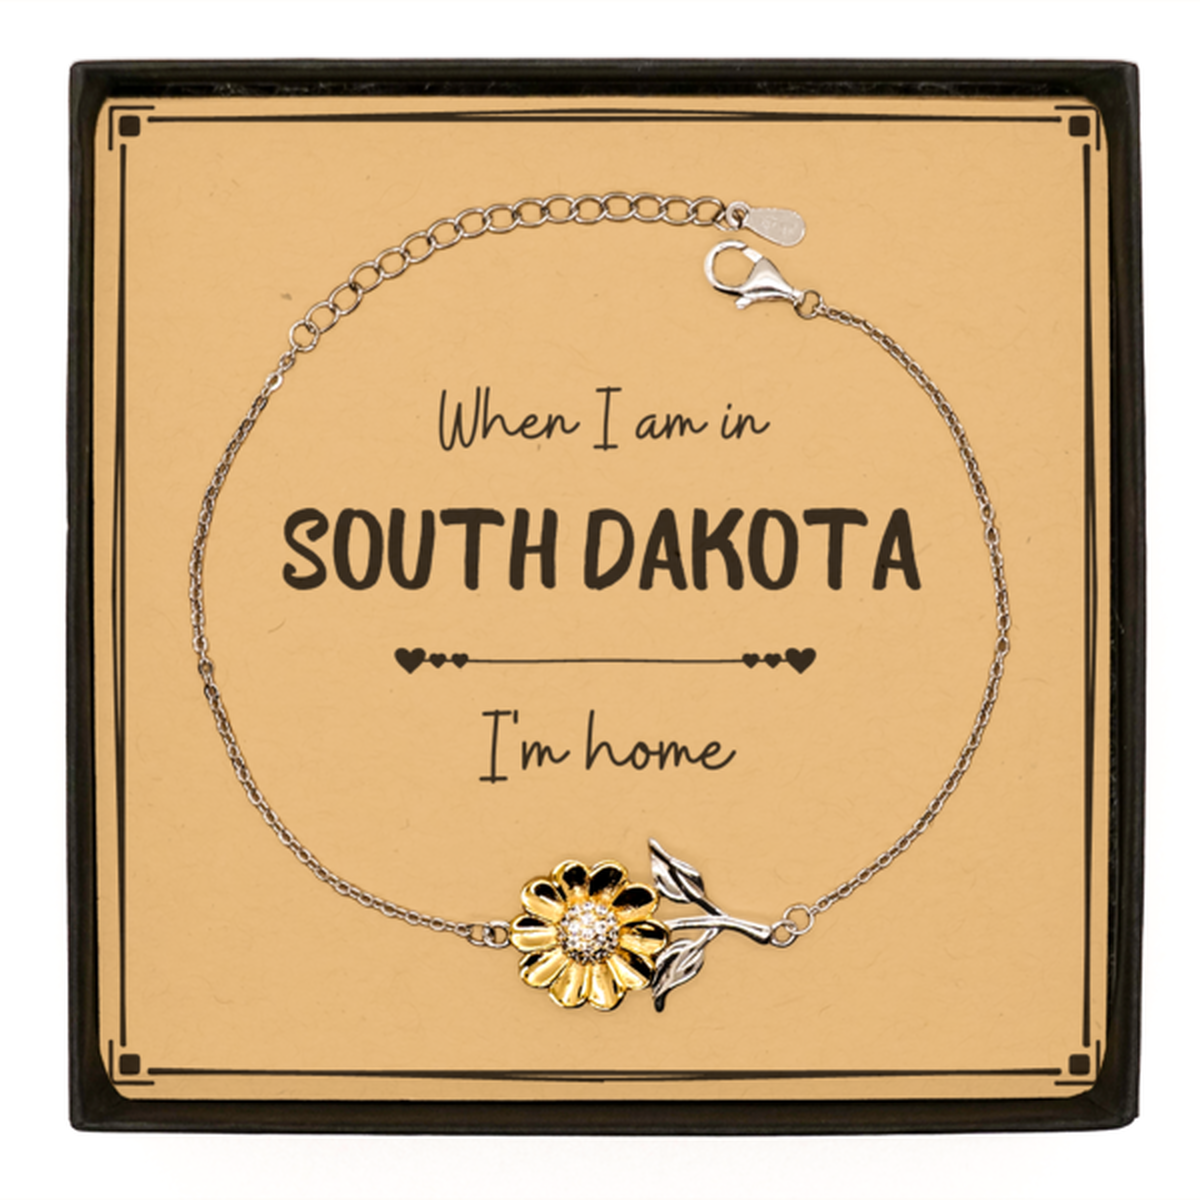 When I am in South Dakota I'm home Sunflower Bracelet, Message Card Gifts For South Dakota, State South Dakota Birthday Gifts for Friends Coworker